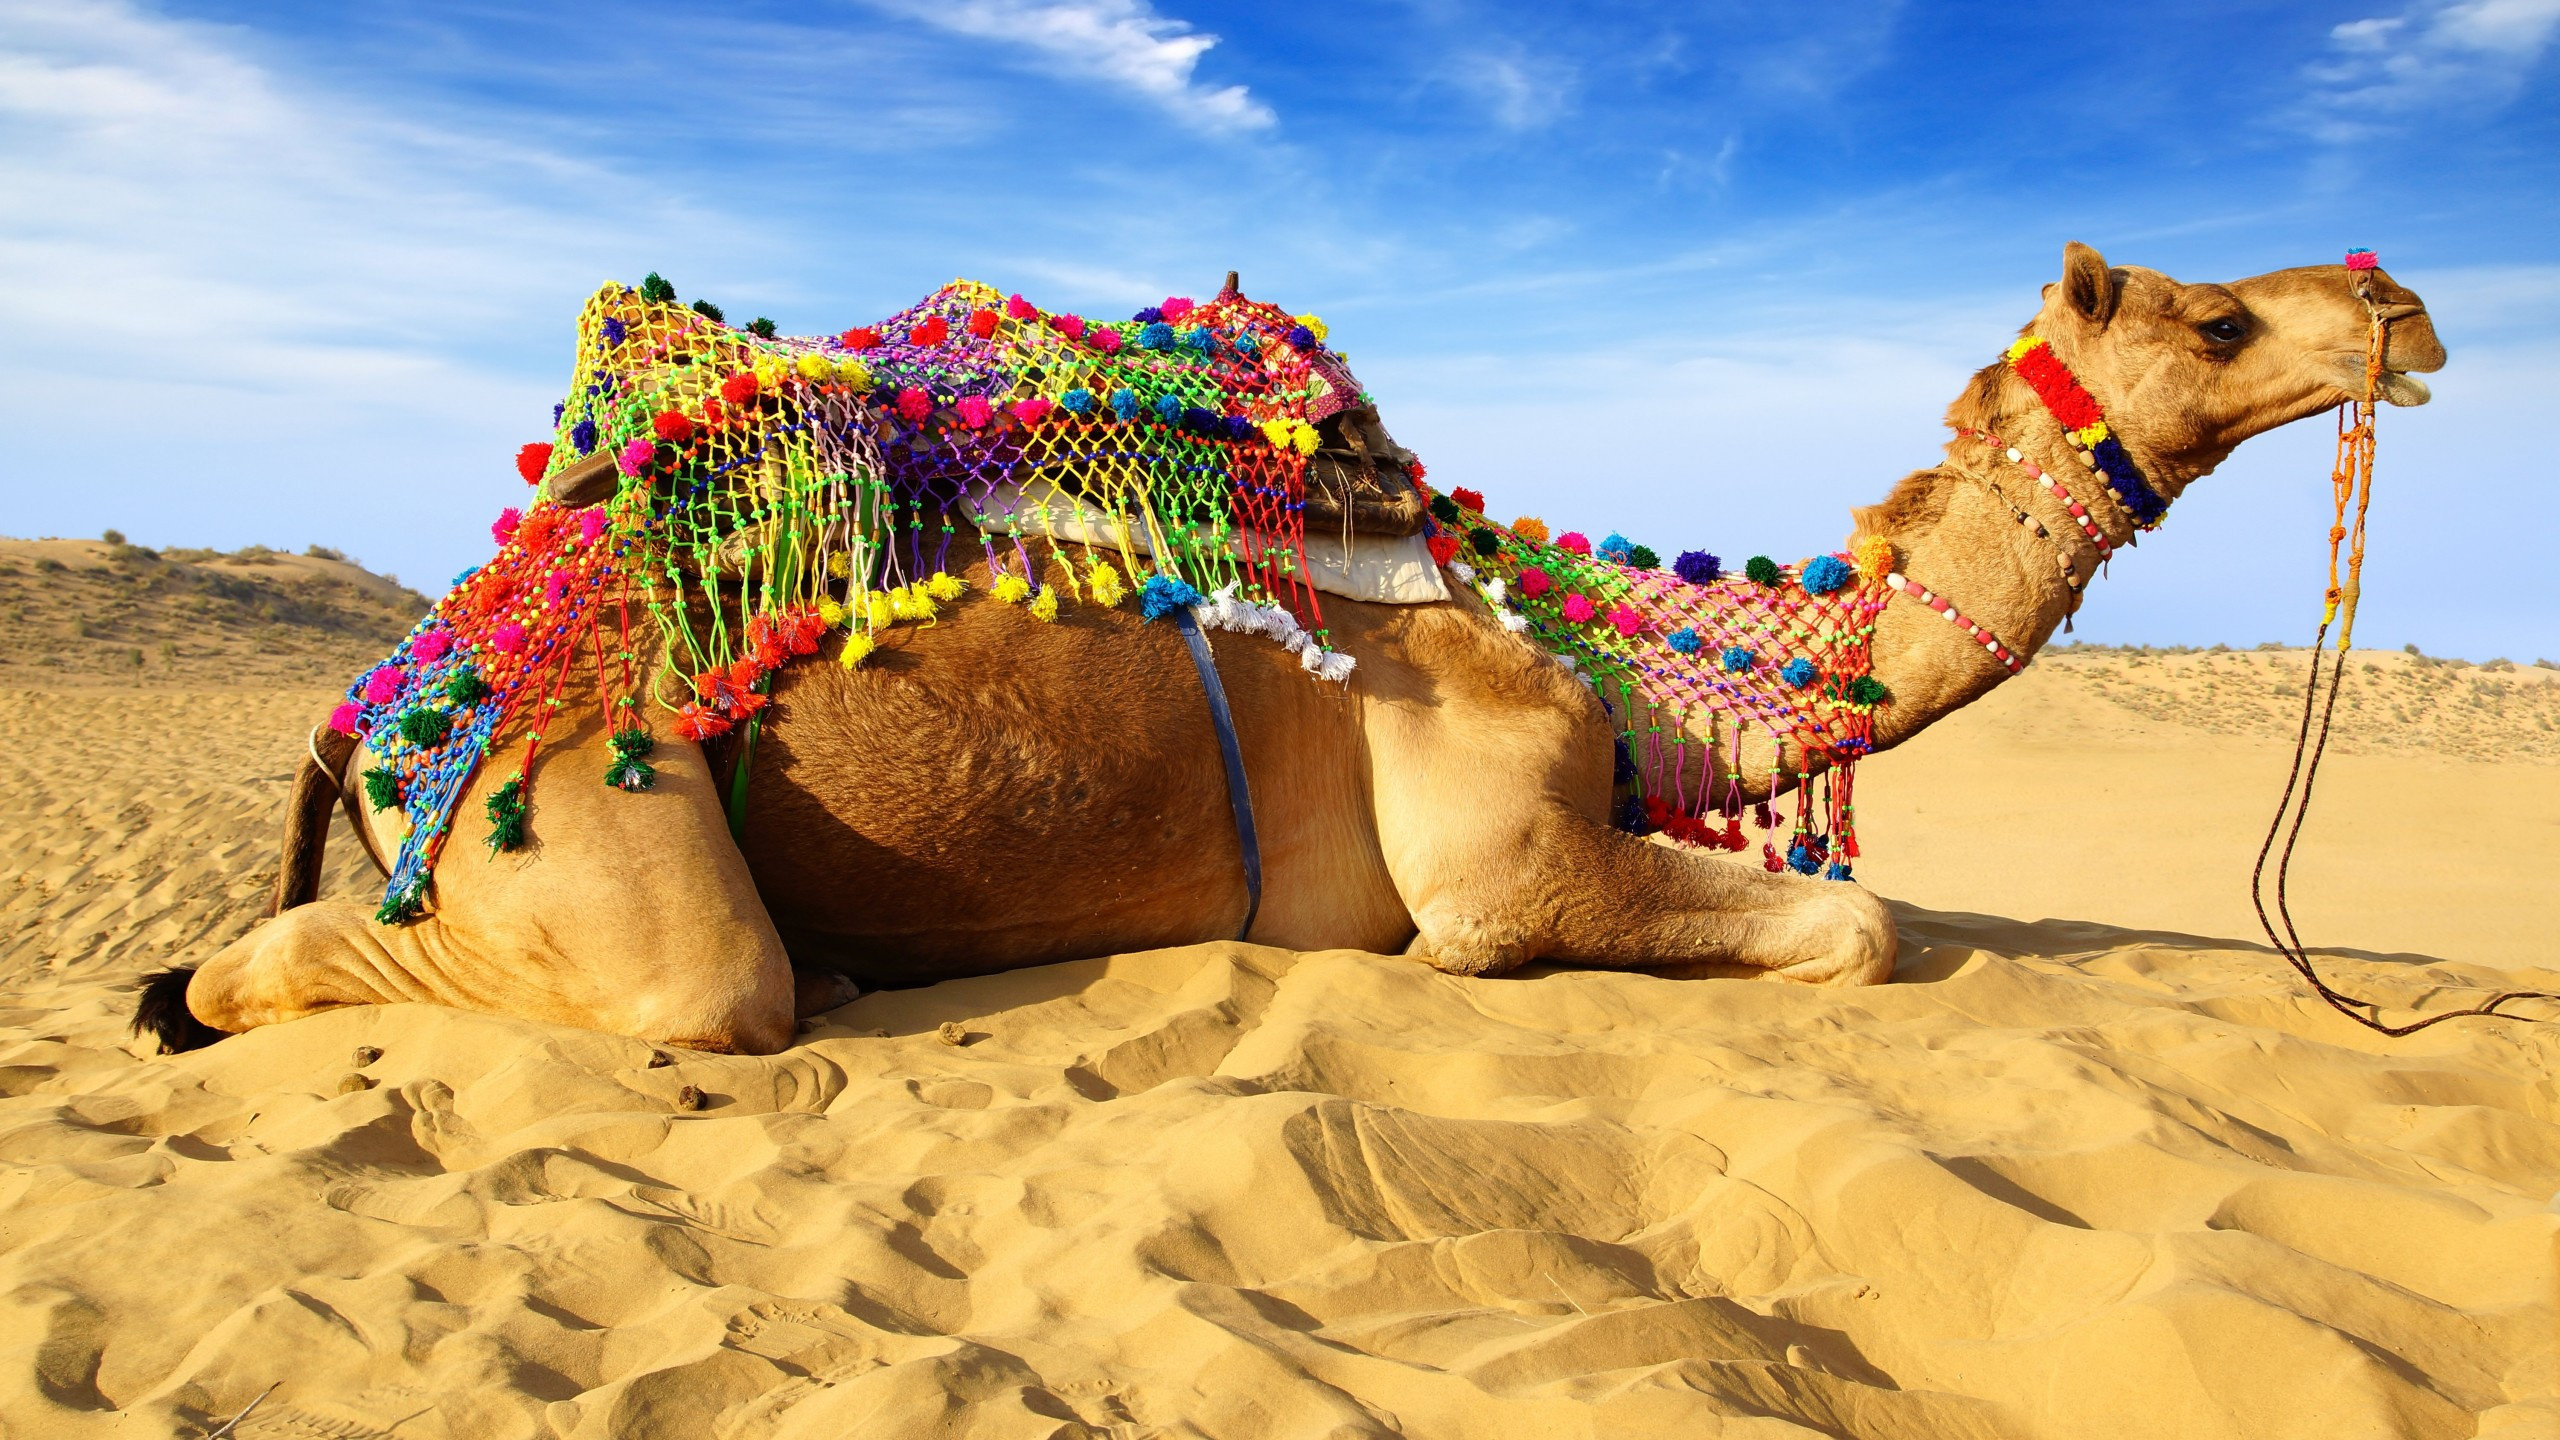 Desert repose, Sandy landscapes, Imac wallpaper, Camel imagery, 2560x1440 HD Desktop